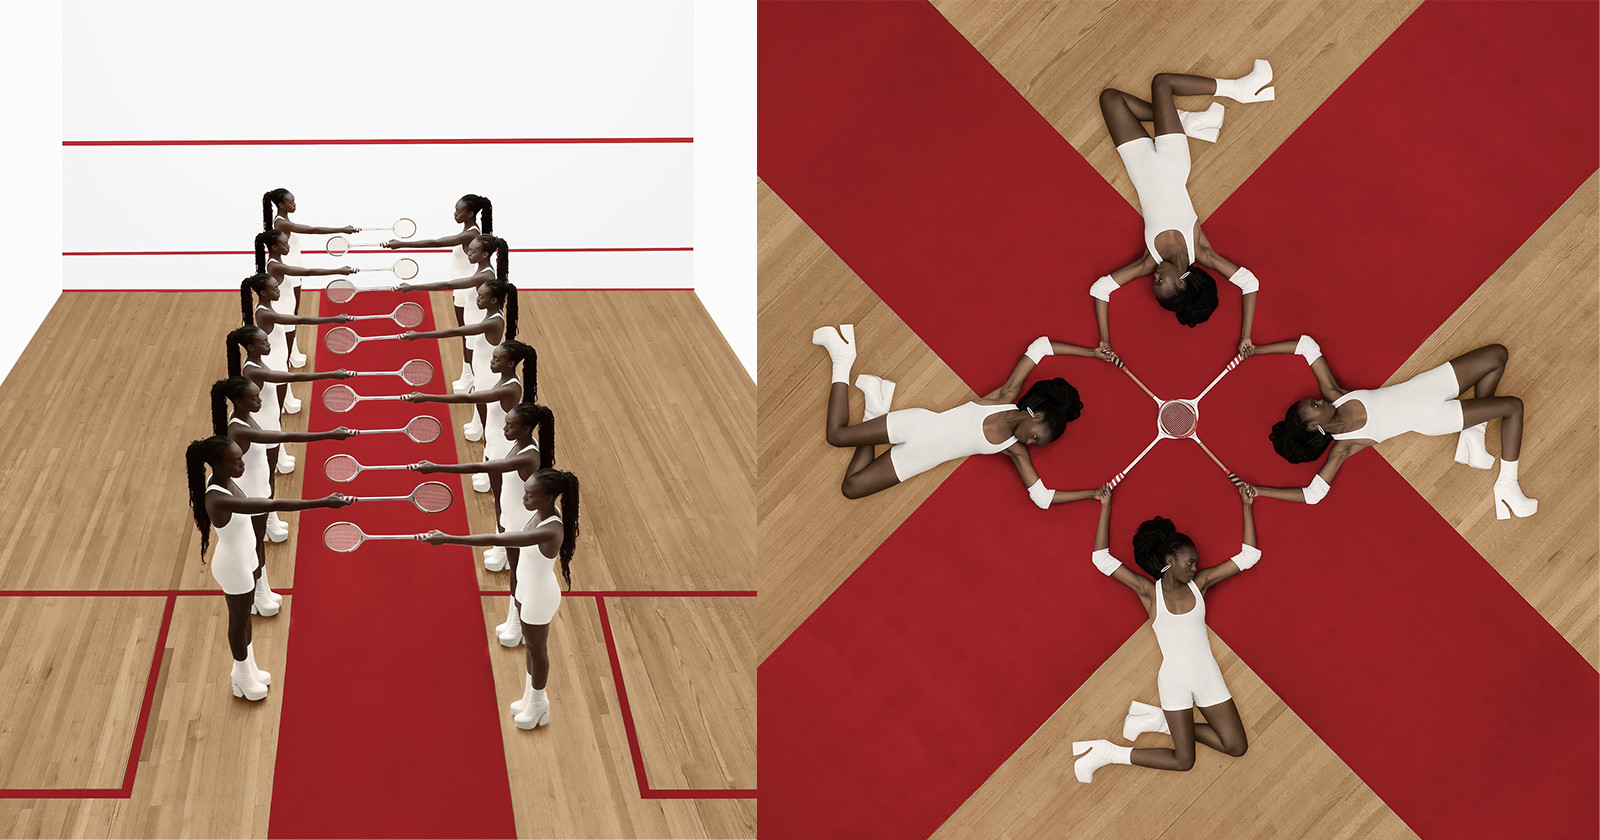  geometric photo series inside squash court was shot 